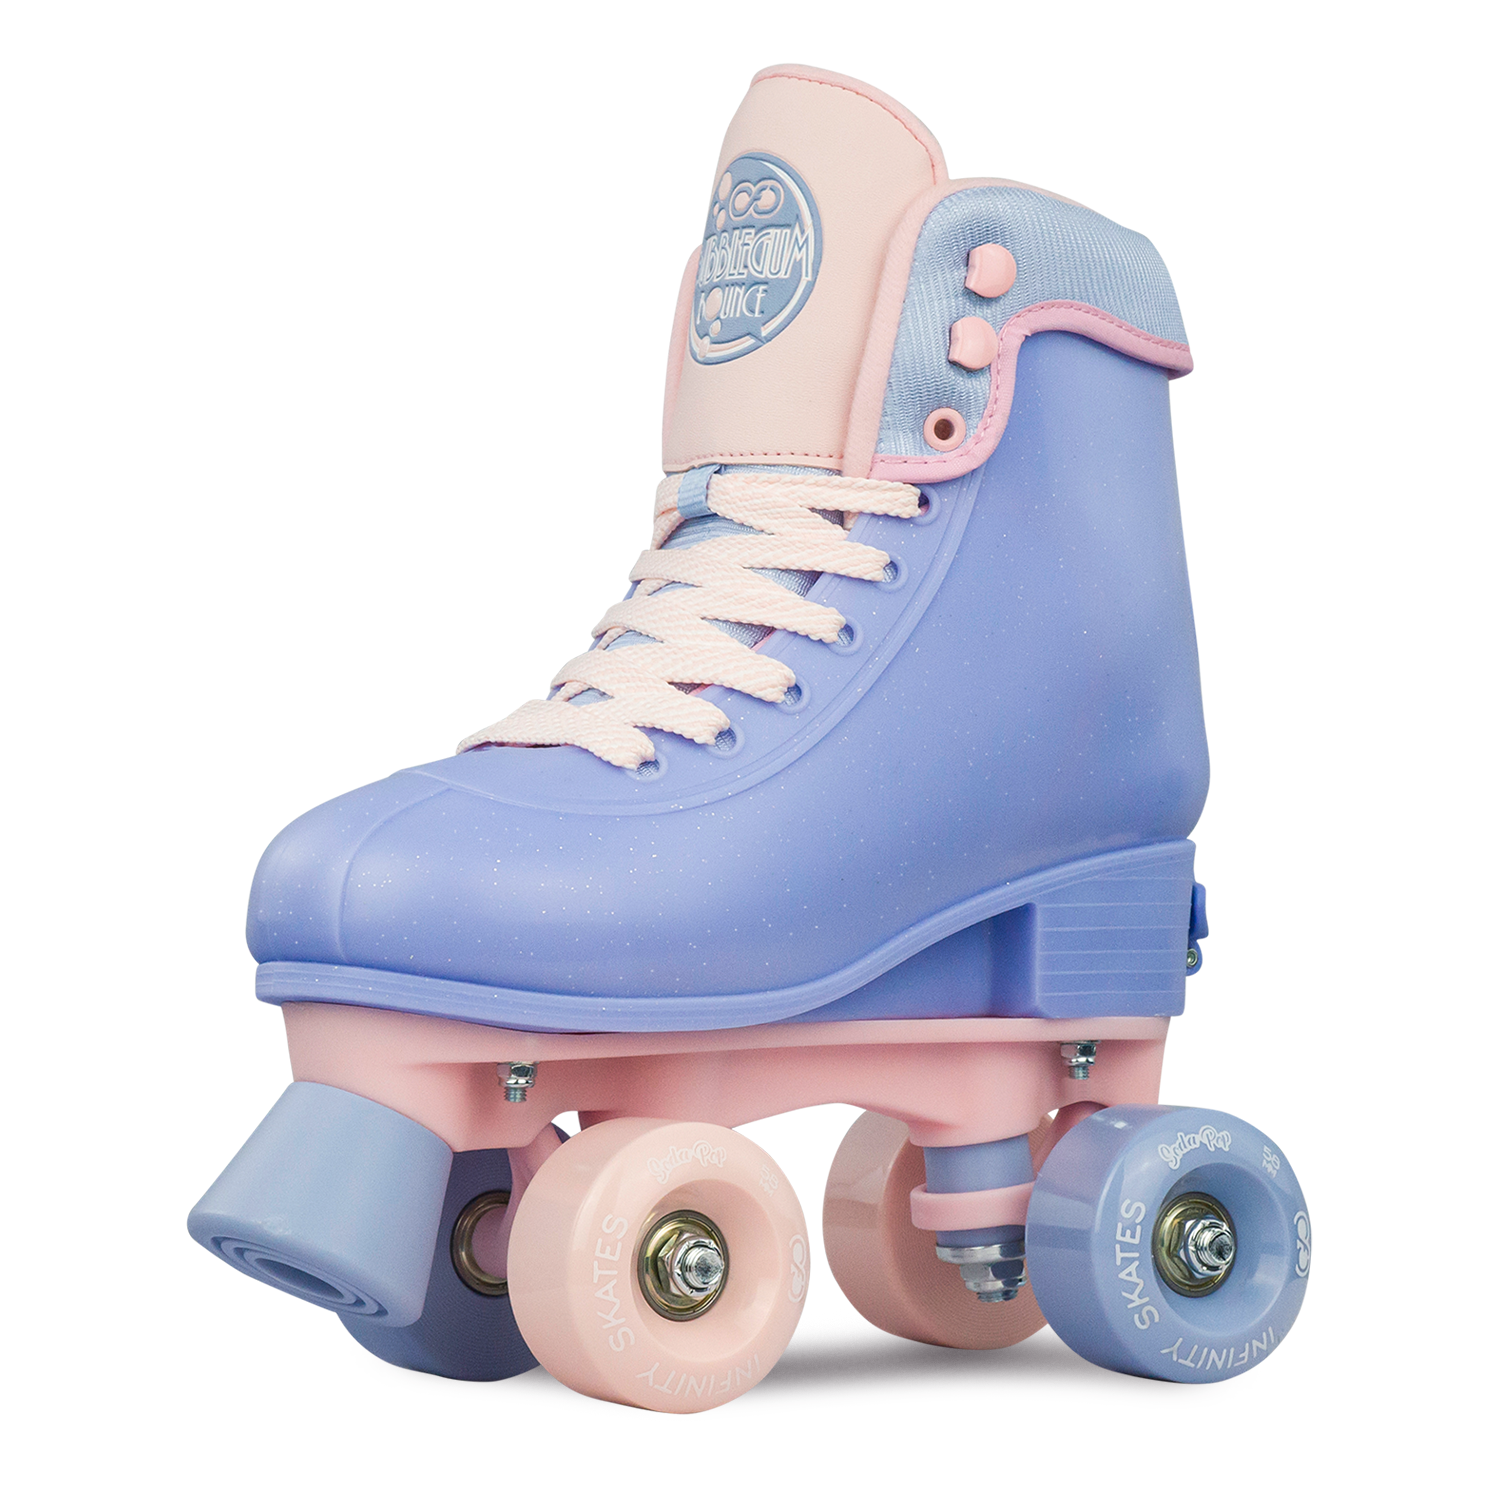 Size Adjustable Quad Skates That Fit 4 Shoe Crazy Skates Glitter POP Adjustable Roller Skates for Girls and Boys 